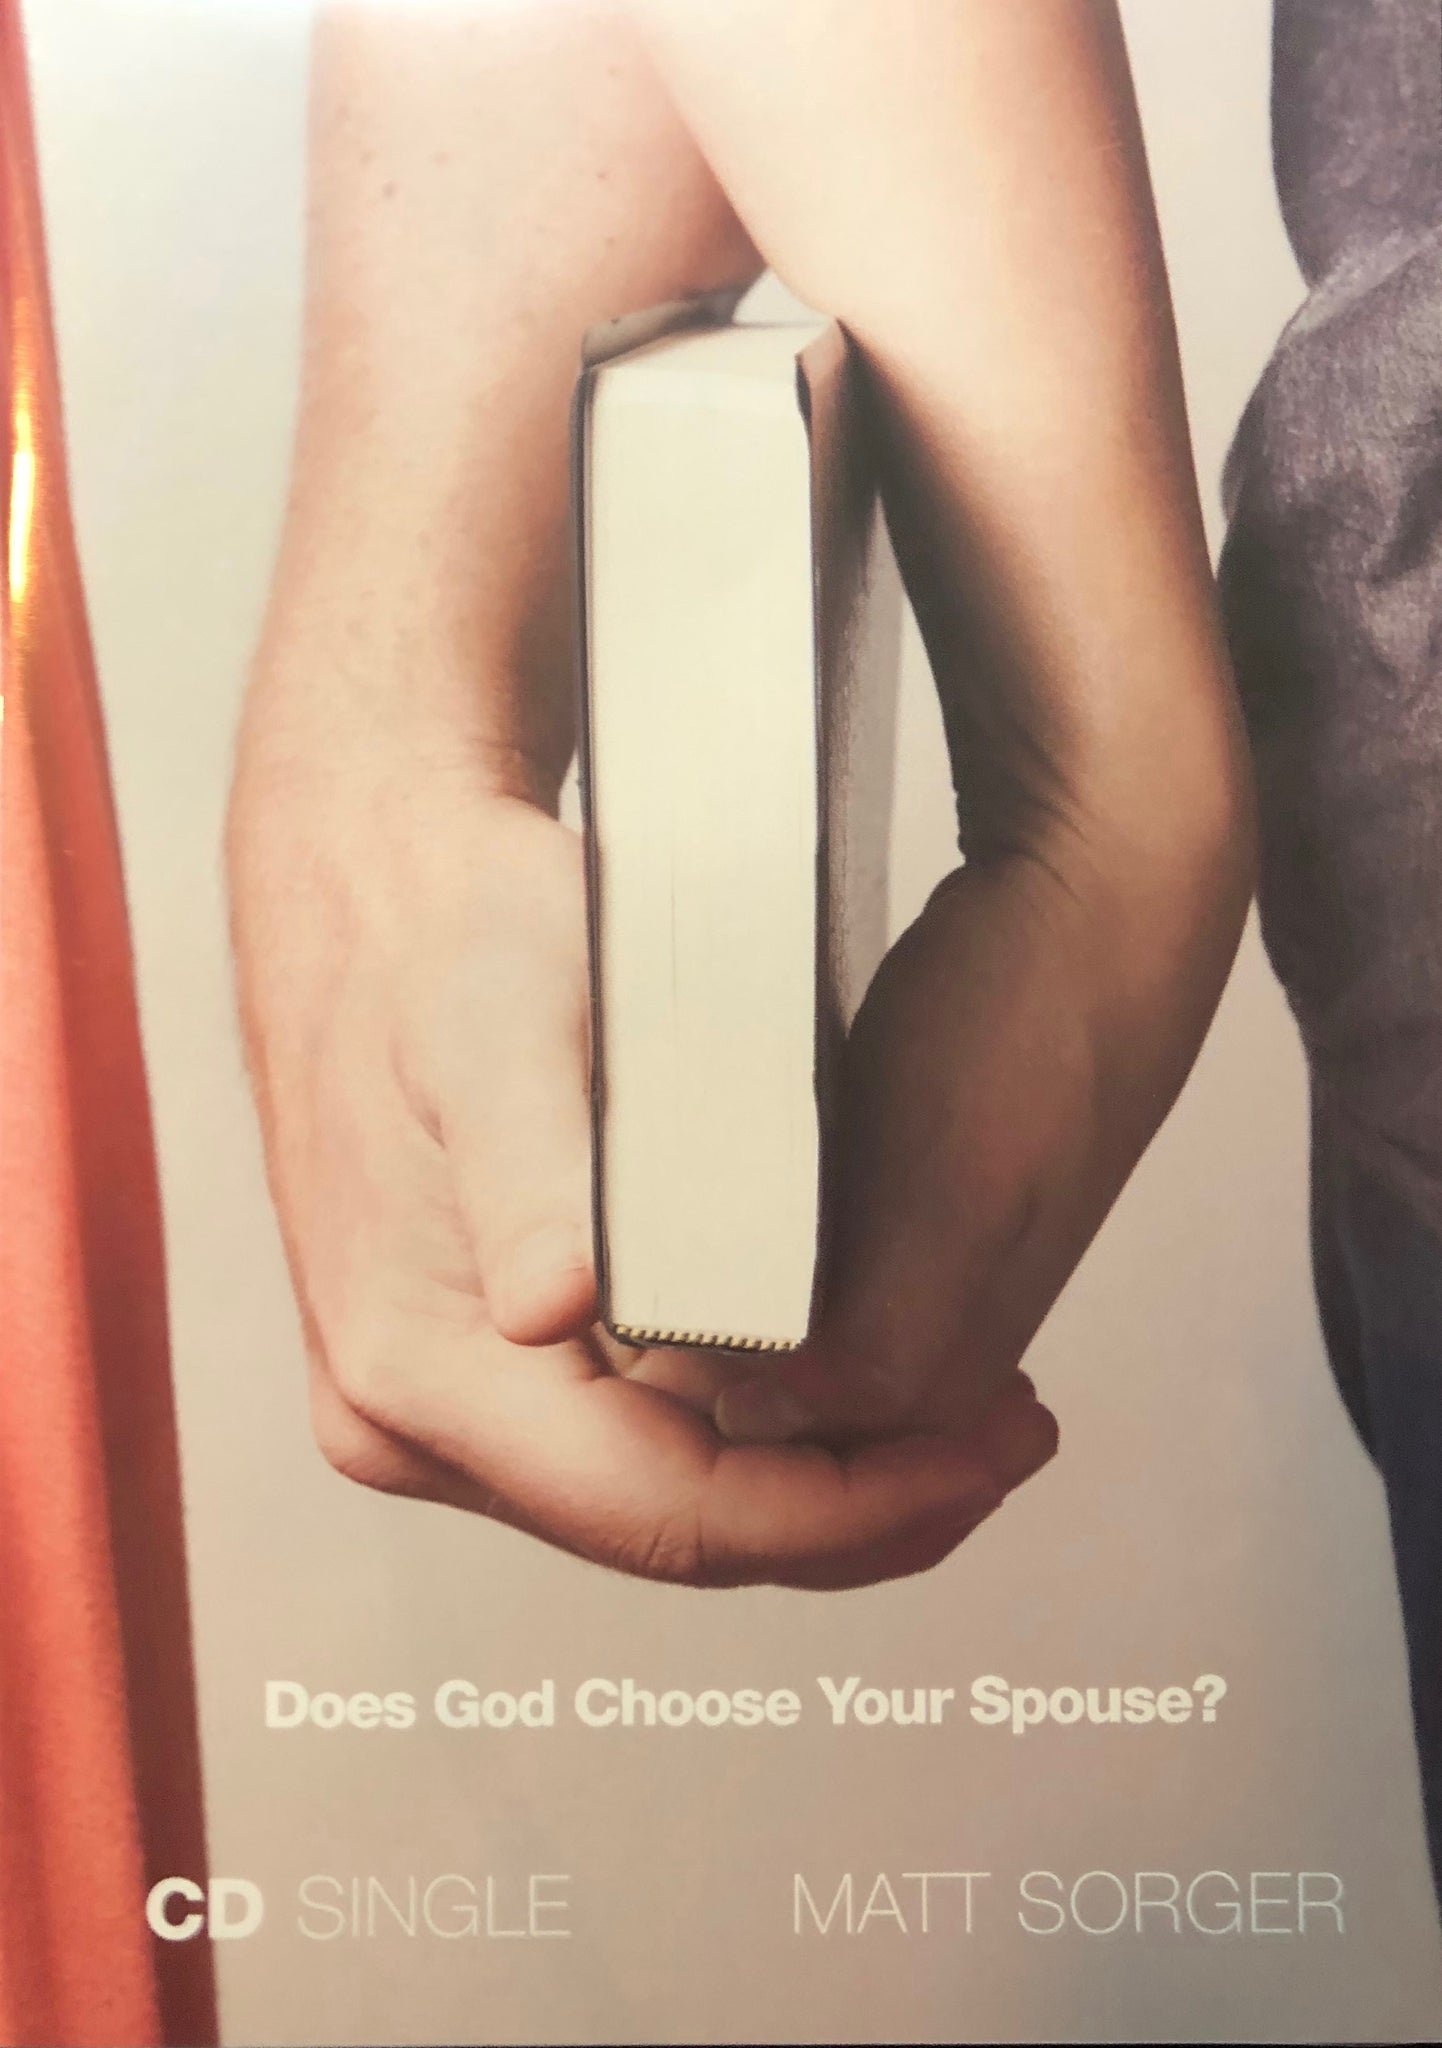 Does God Choose Your Spouse? (Single CD) - Matt Sorger Ministries